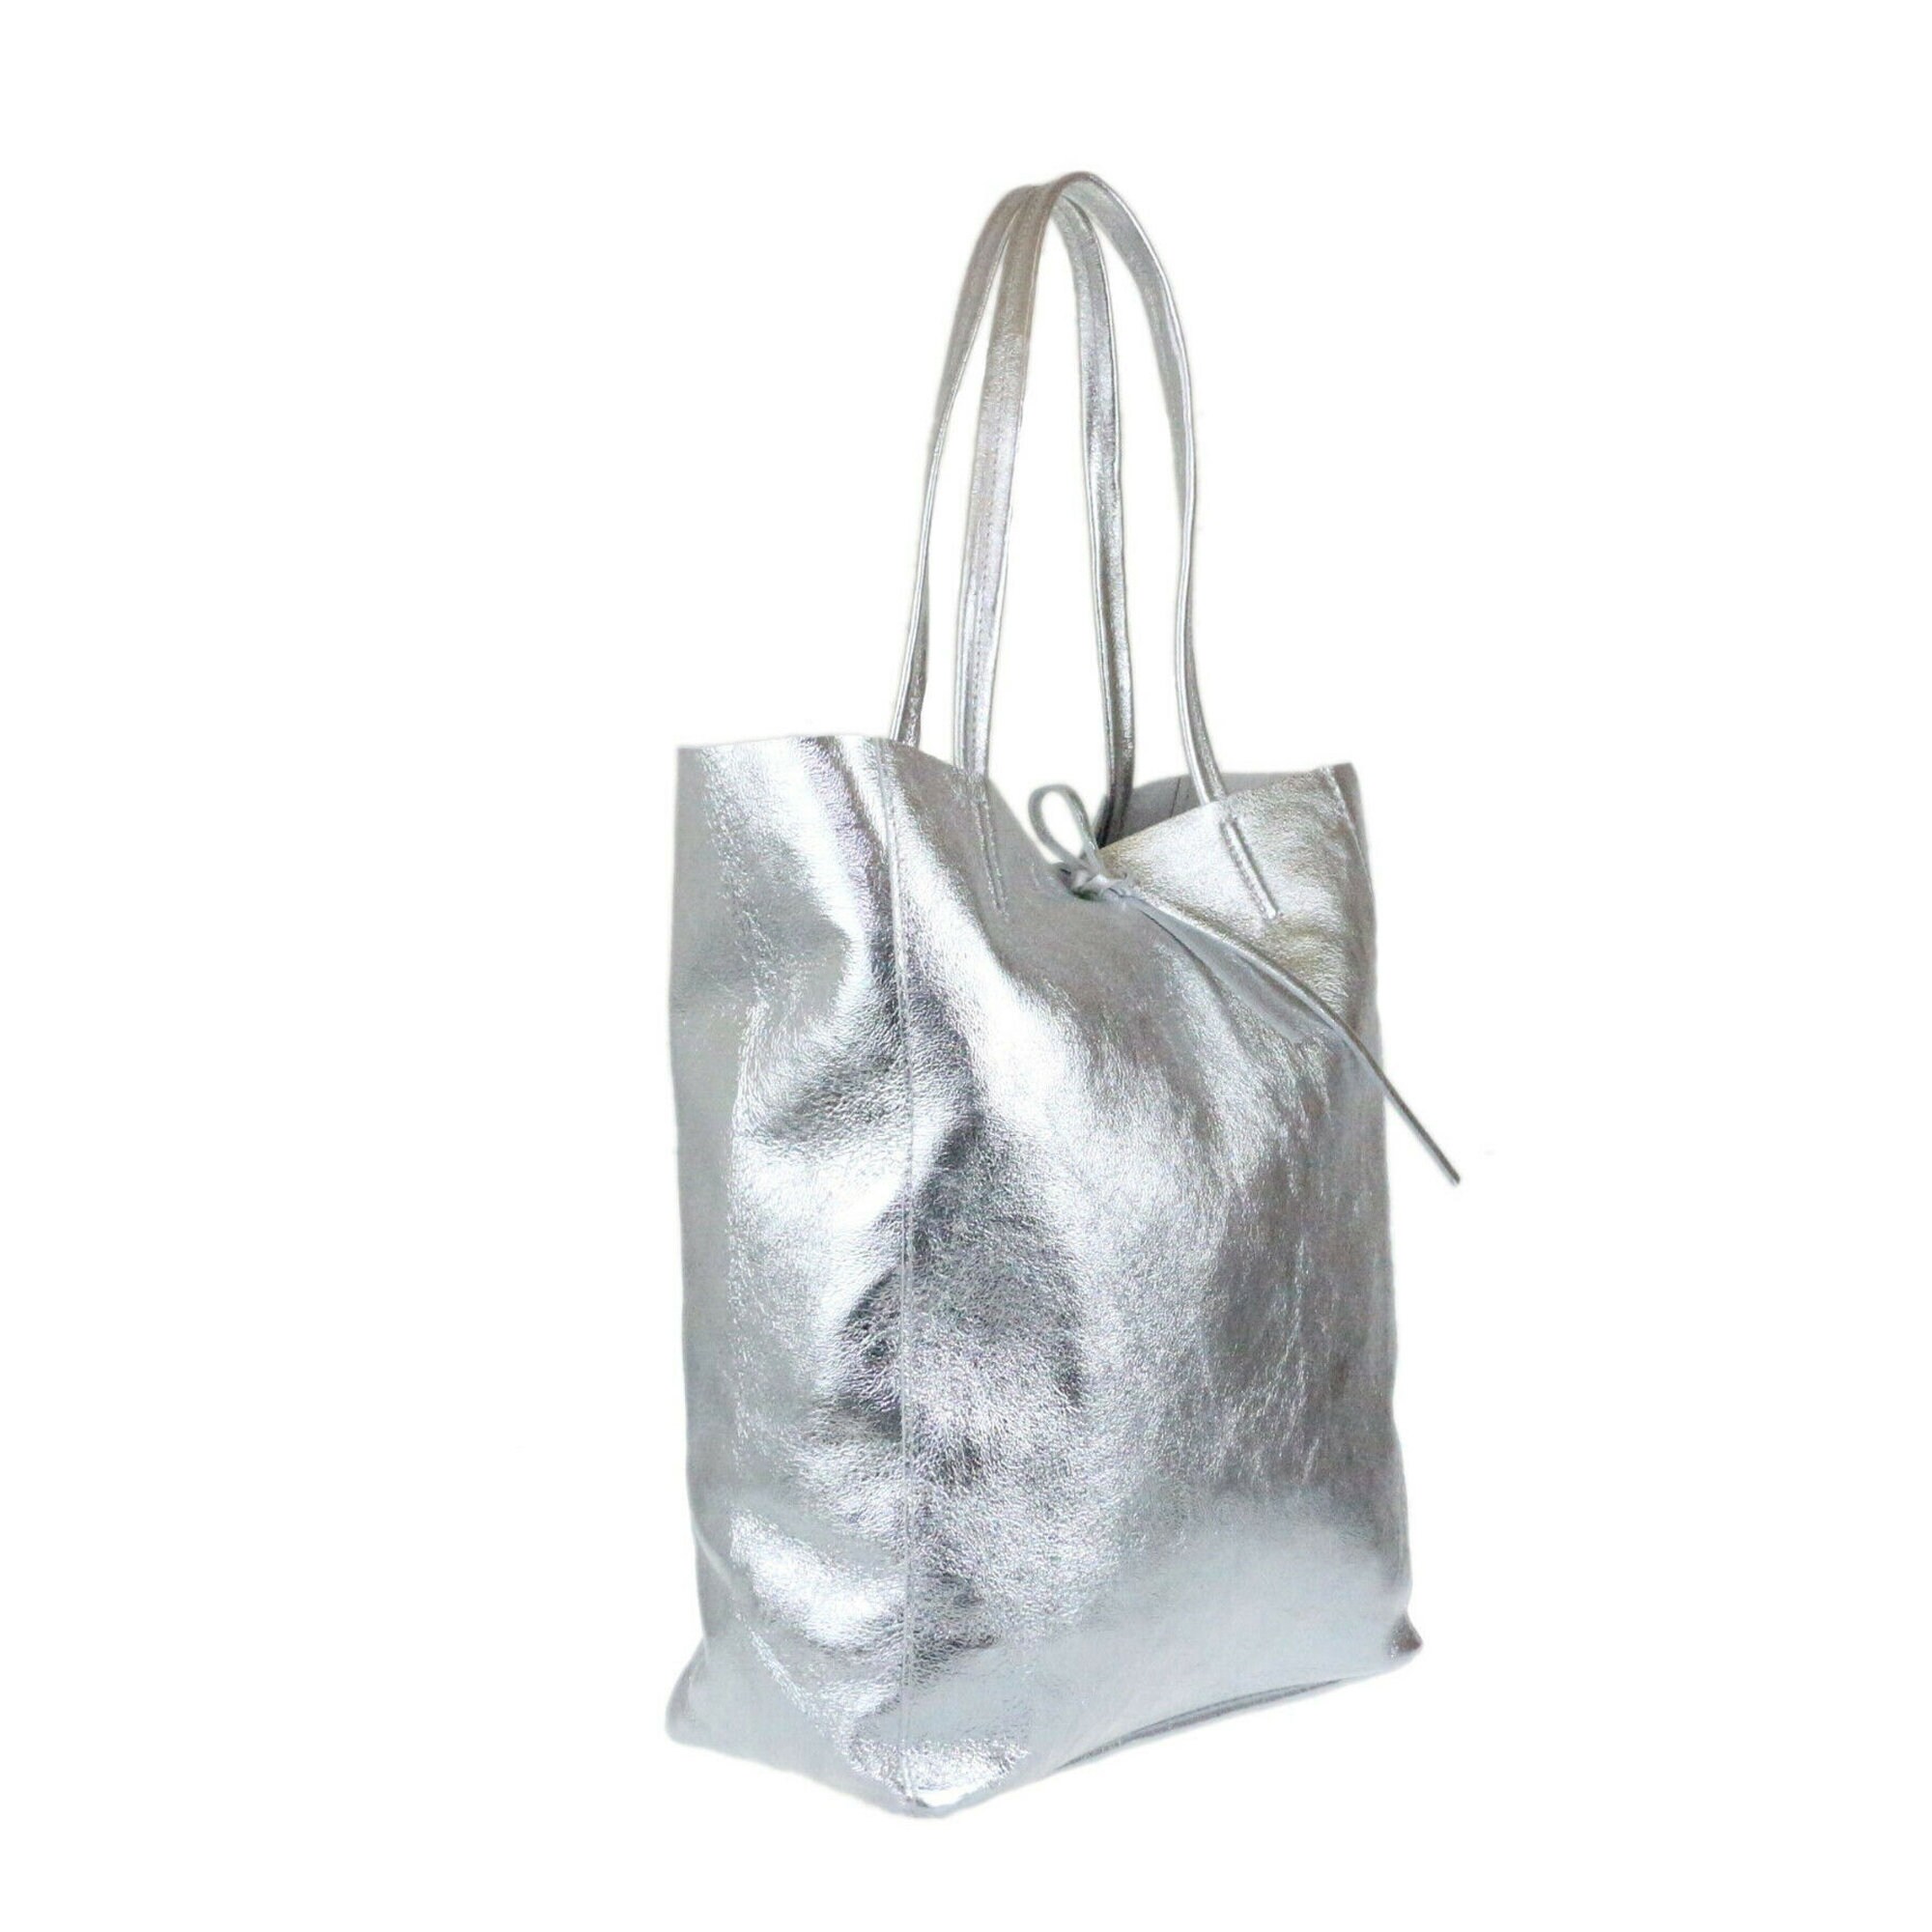 Silver Soft Leather Shopper Tote Bag Silver Leather Shoulder | Etsy